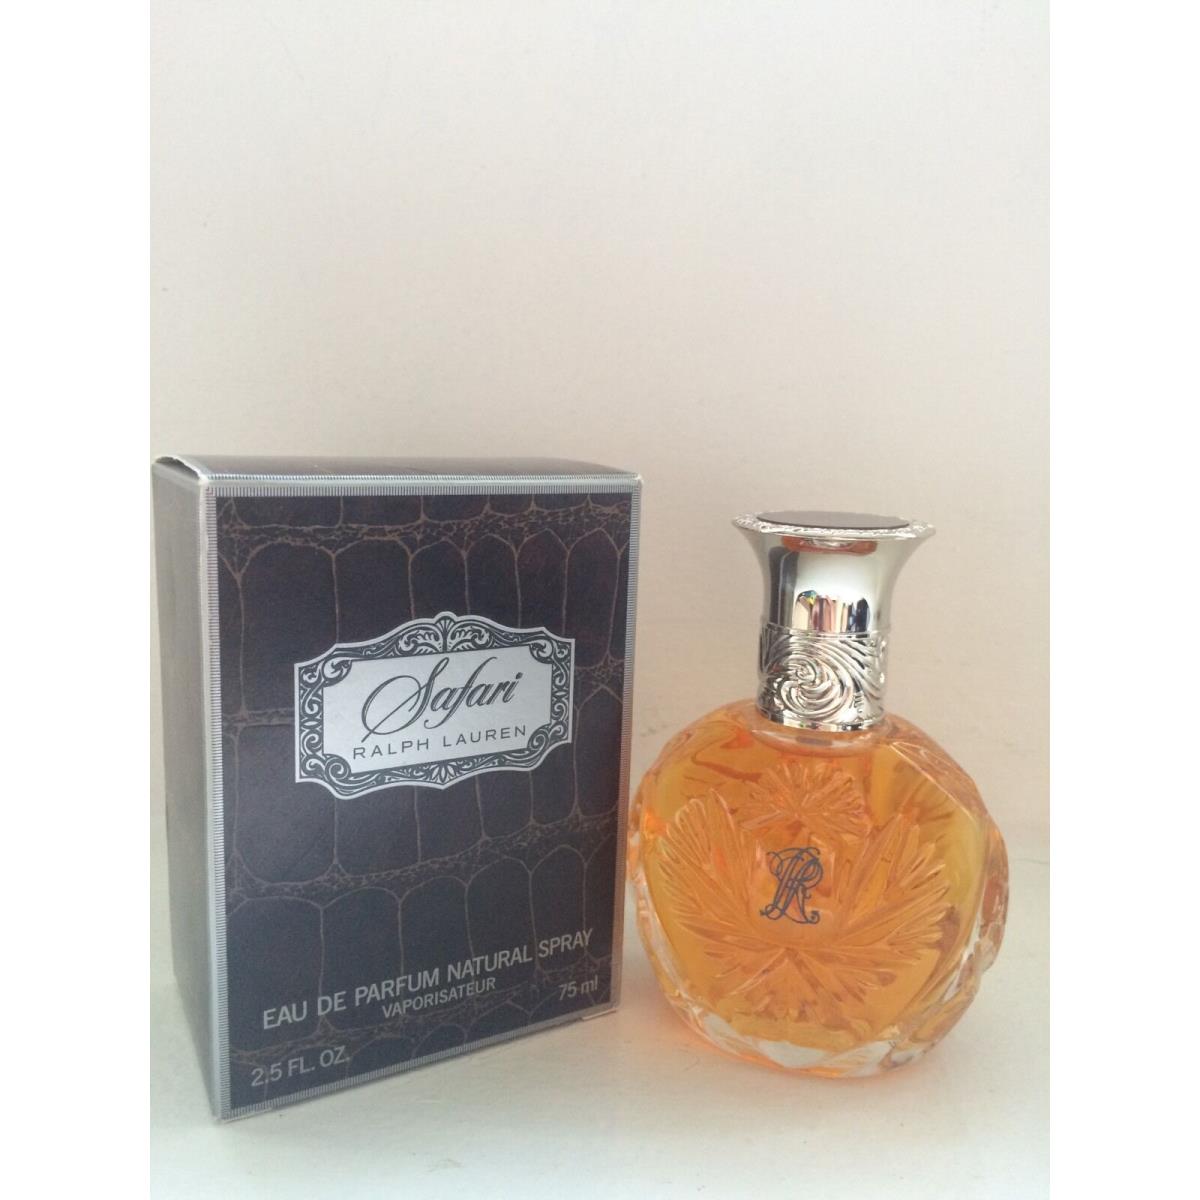 Safari Ralph Lauren 2.5 oz / 75 ml Eau de Parfum Spray Vintage Cosmair Rare